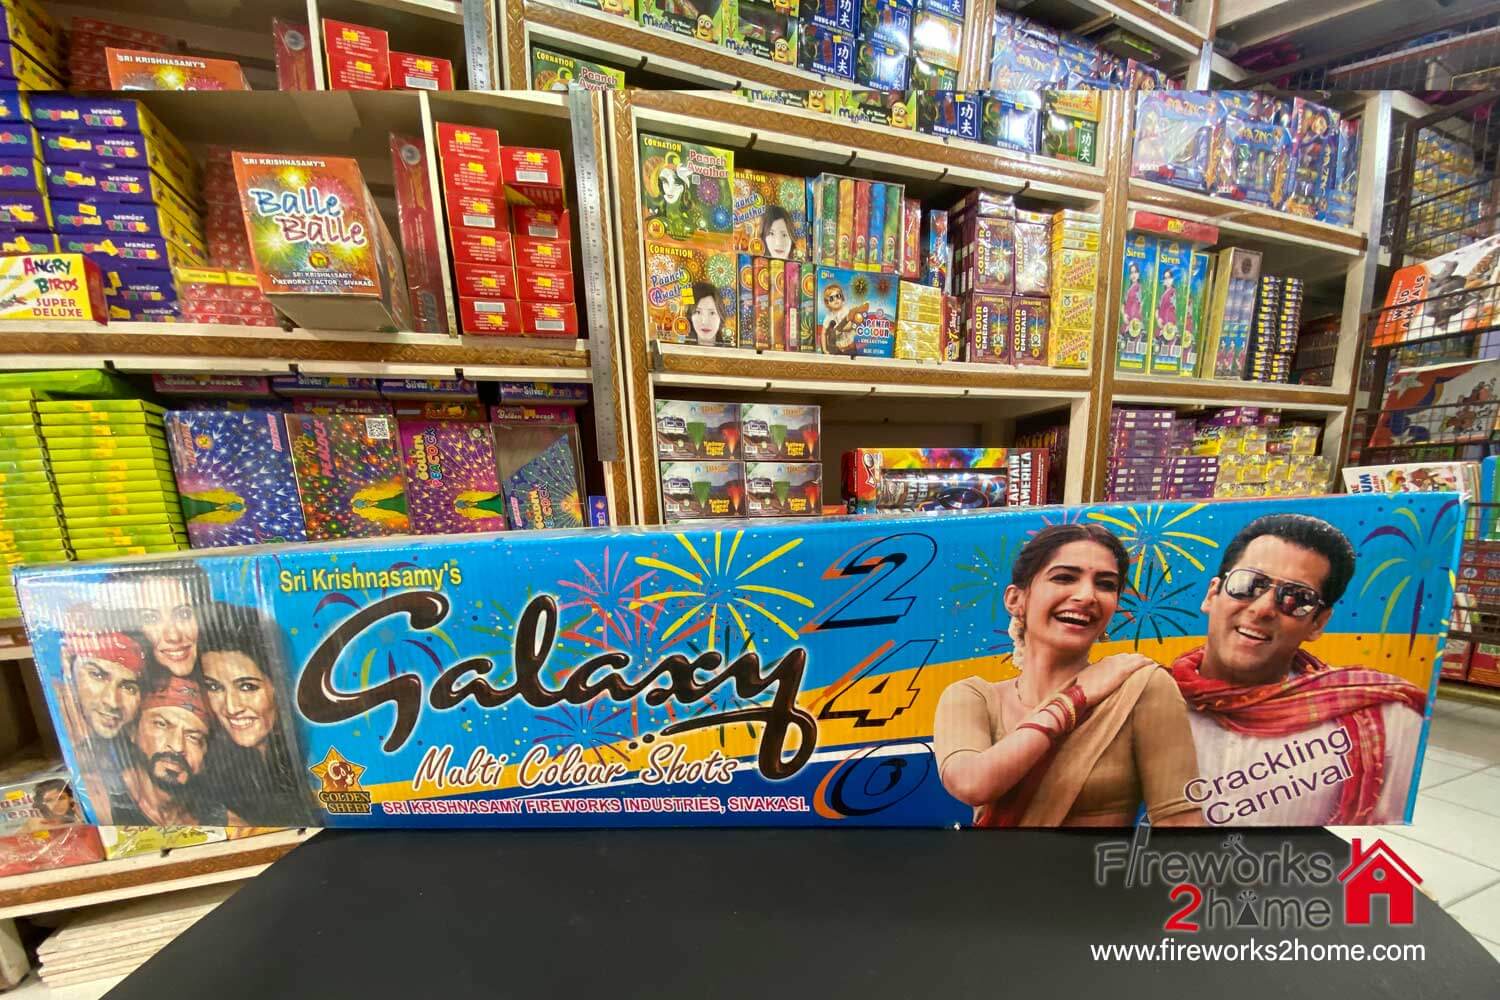 Galaxy Muticolour 240 Sky Shots Sky Shot by Sri Krishnasamy's (pieces per box 1)